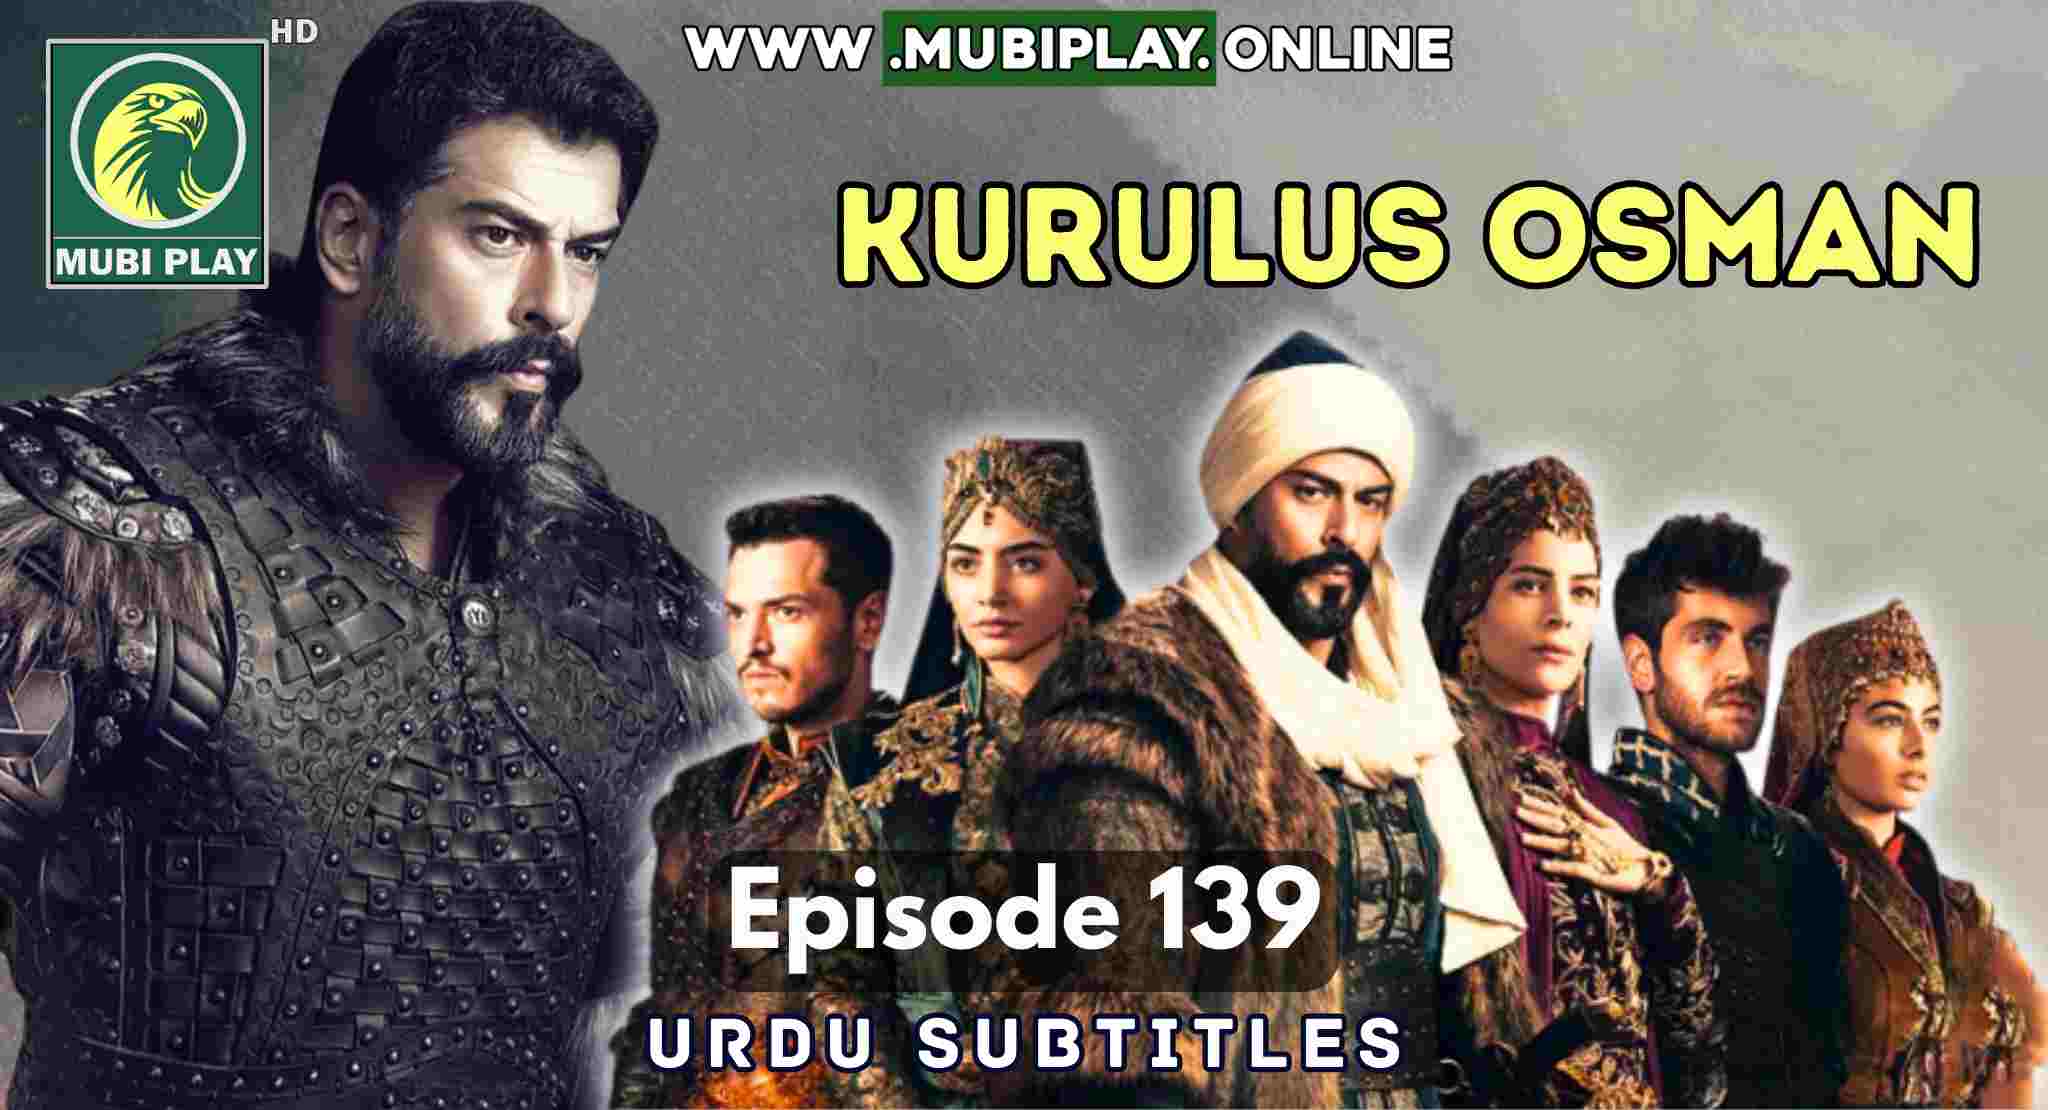 Kurulus Osman Episode 139 with Urdu Subtitles by Mubi Play